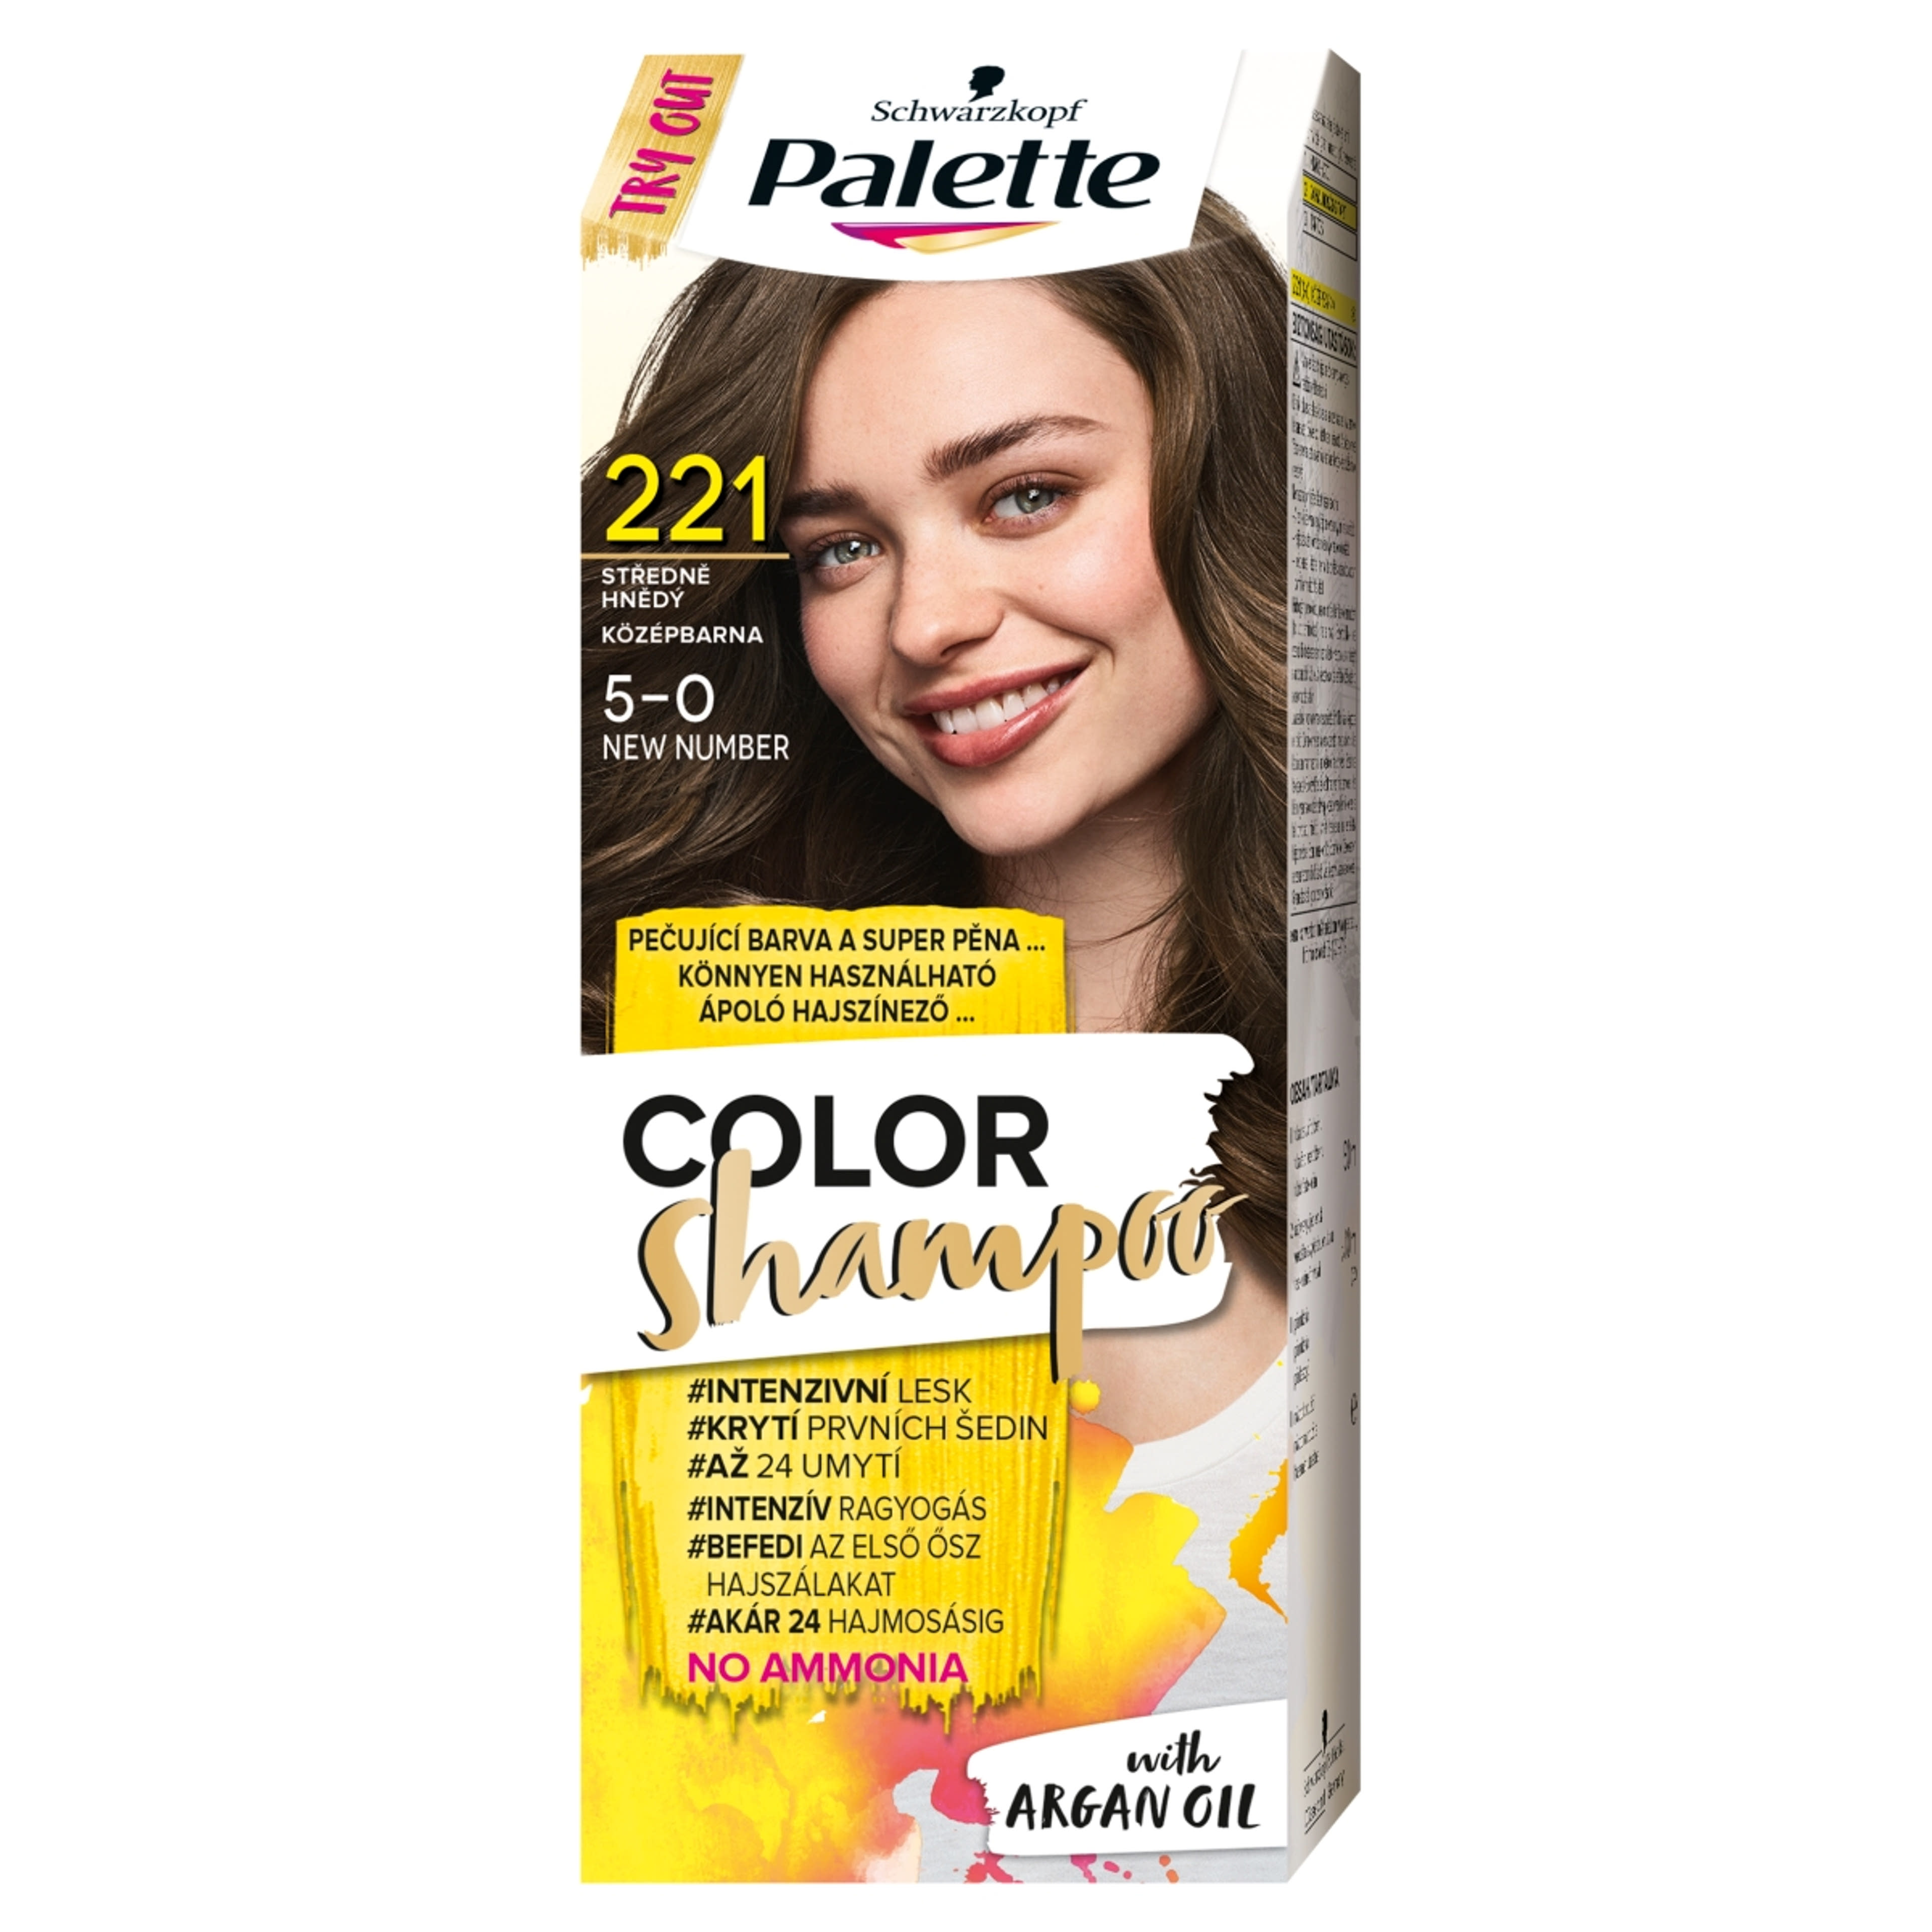 Schwarzkopf Palette Color Shampoo hajfesték 221 középbarna - 1 db